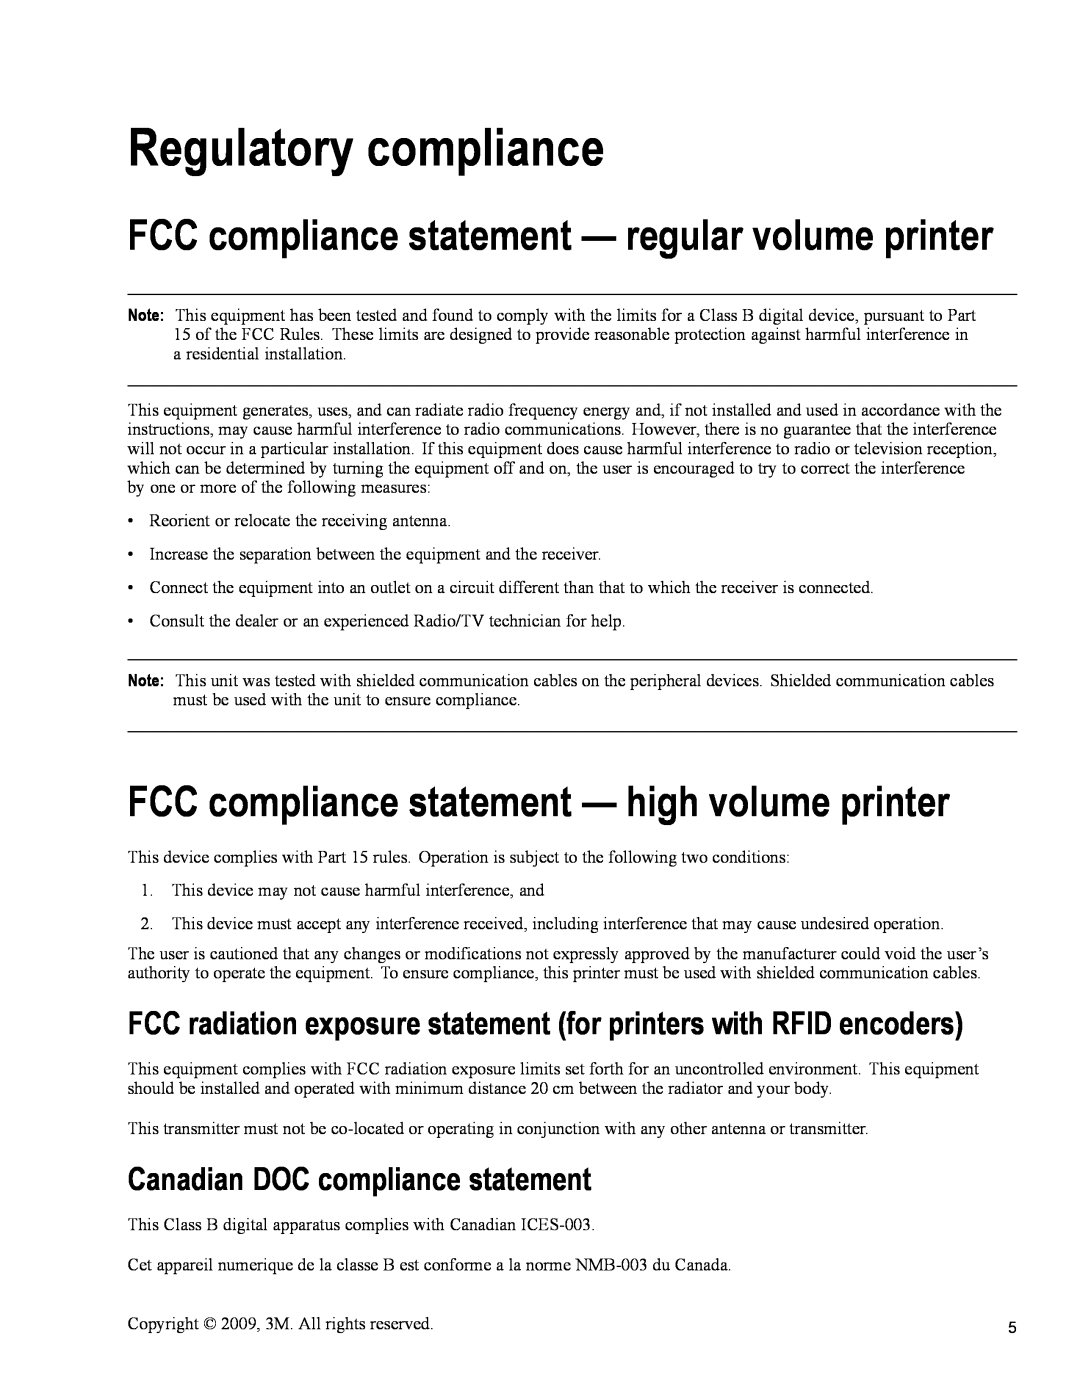 3M 813 Regulatory compliance, FCC compliance statement - regular volume printer, Canadian DOC compliance statement 